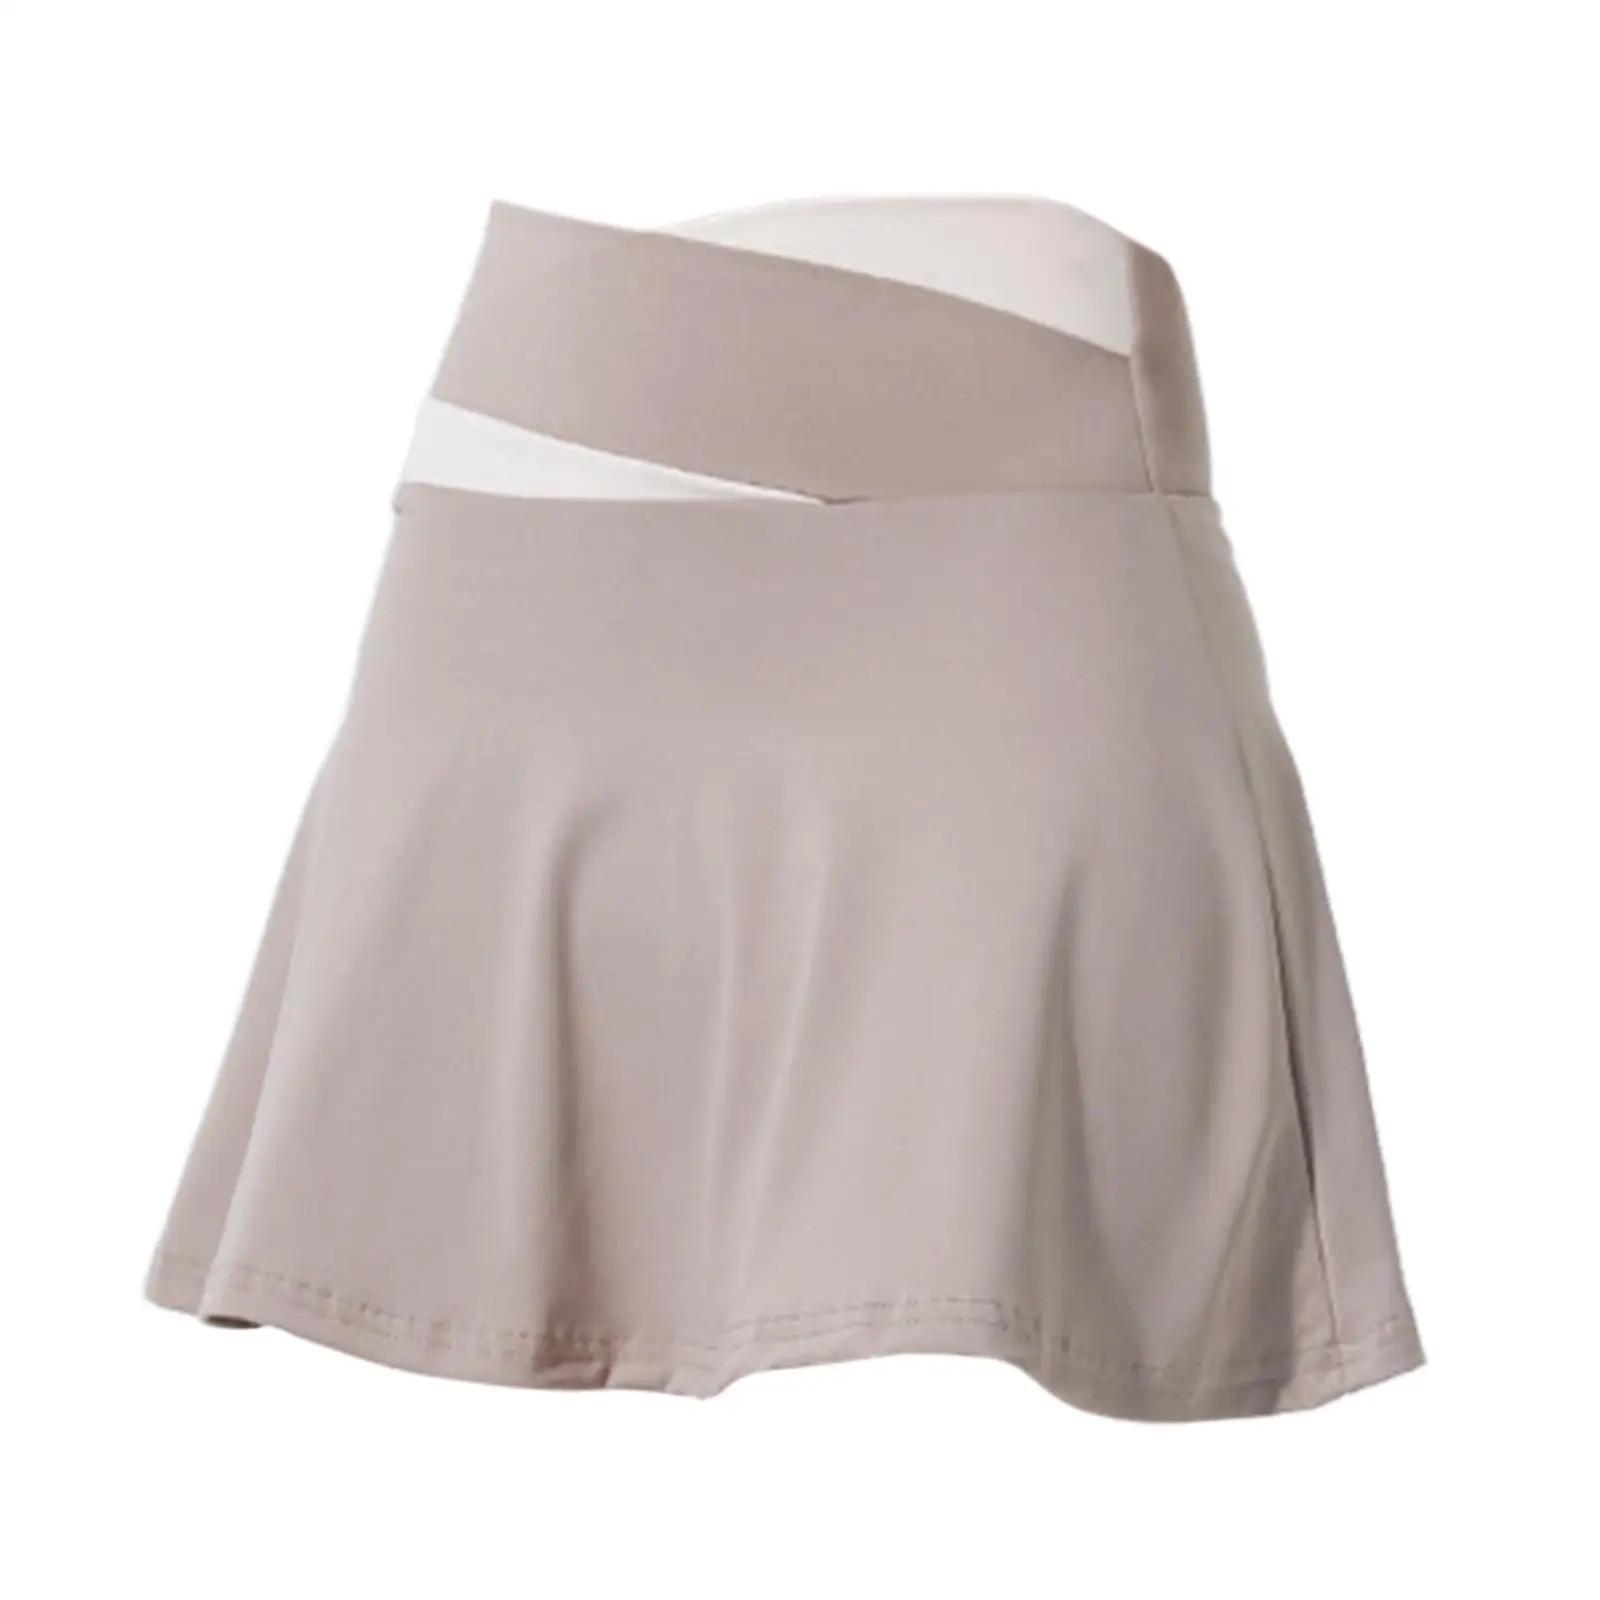 Tennis Skirts Short Skirt Comfortable Breathable Activewear Women`s Culottes Skirt for Running Golf Exercise Summer Sport